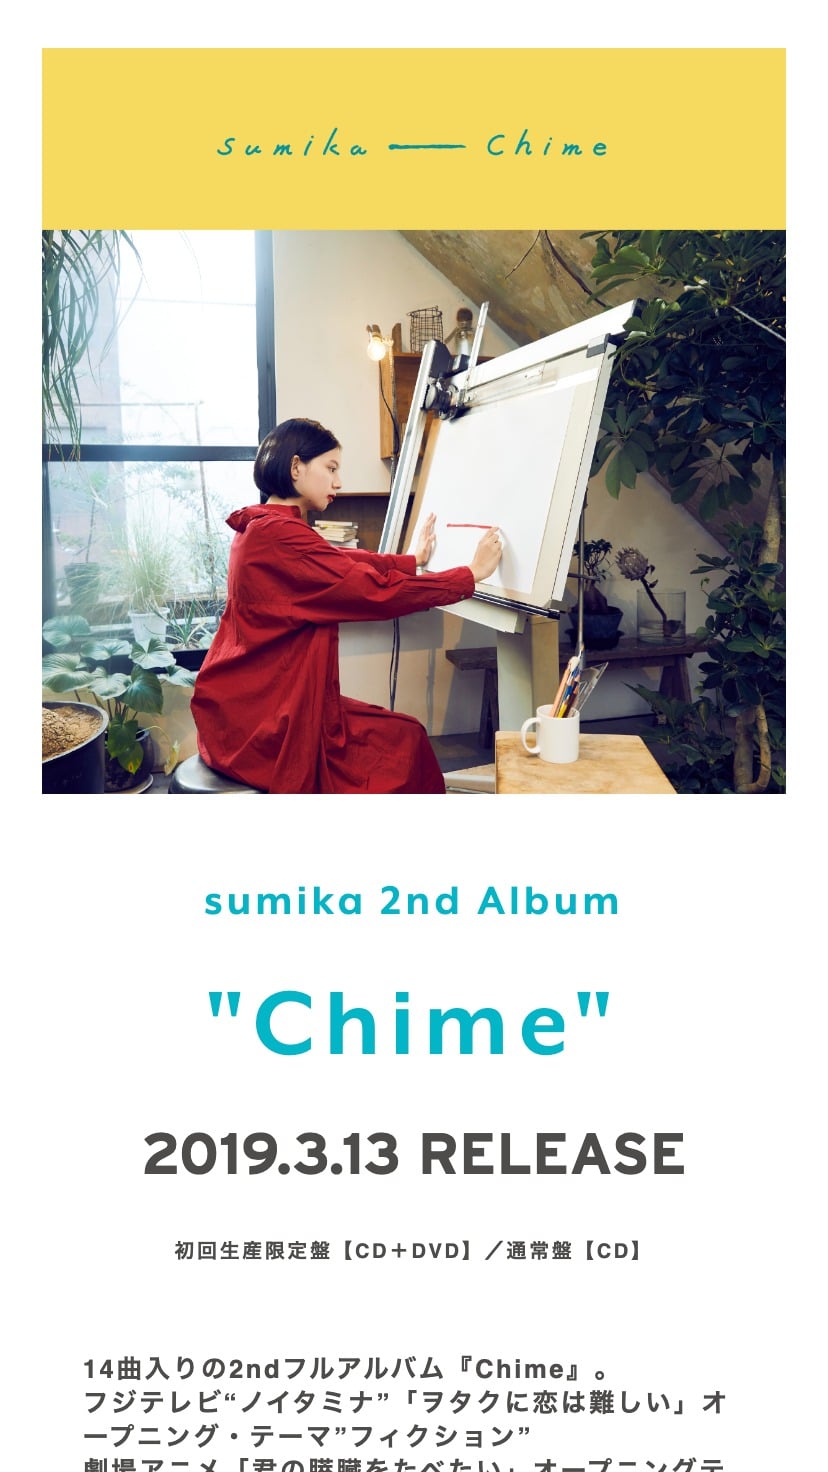 sumika『Chime』 | デザインのこと - Web design gallery